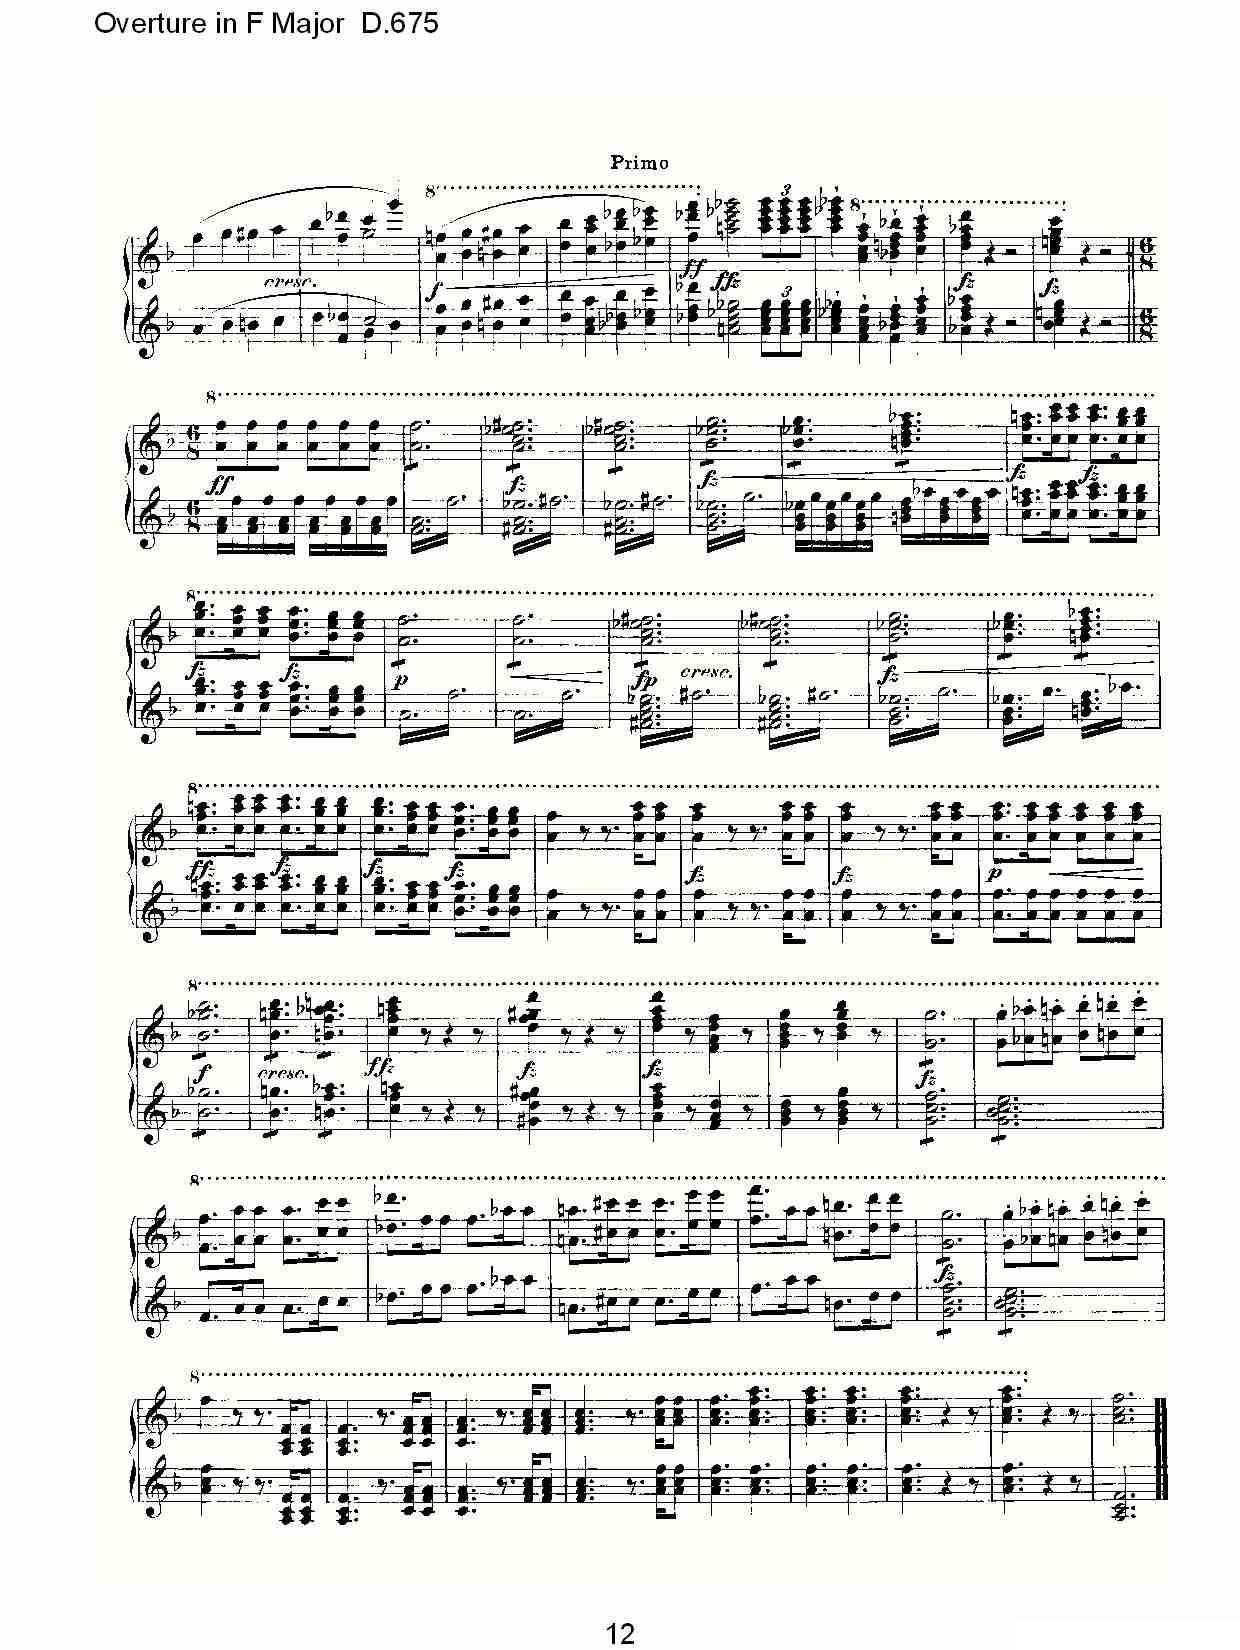 Overture in F Major D.675（Ｆ大调序曲 D.675）钢琴曲谱（图12）